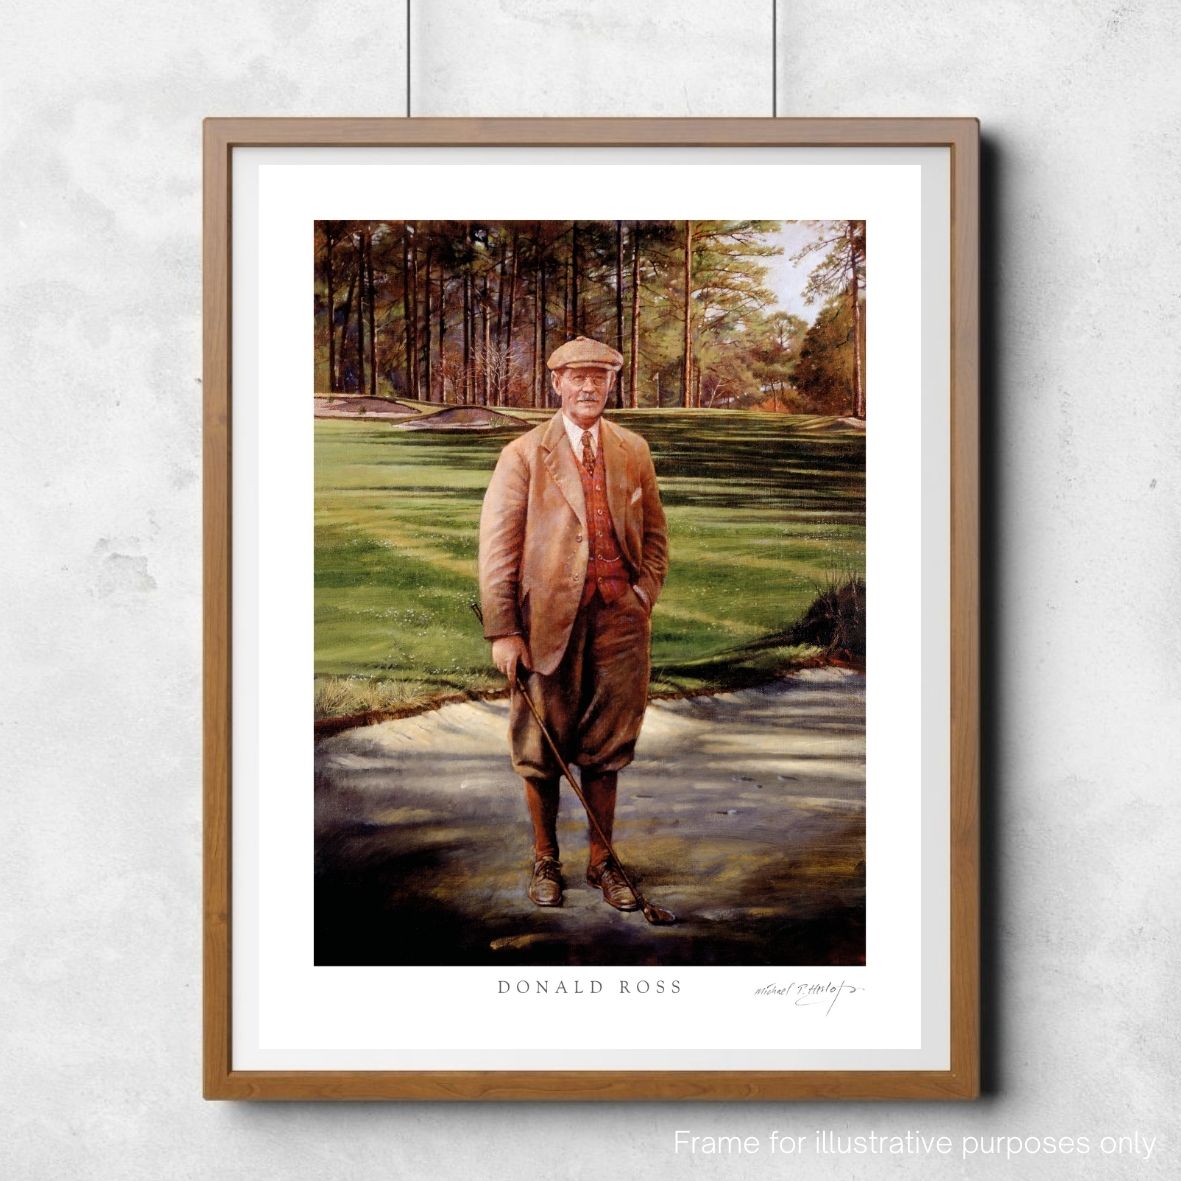 Donald Ross golf architect, framed fine art print by Michael Heslop